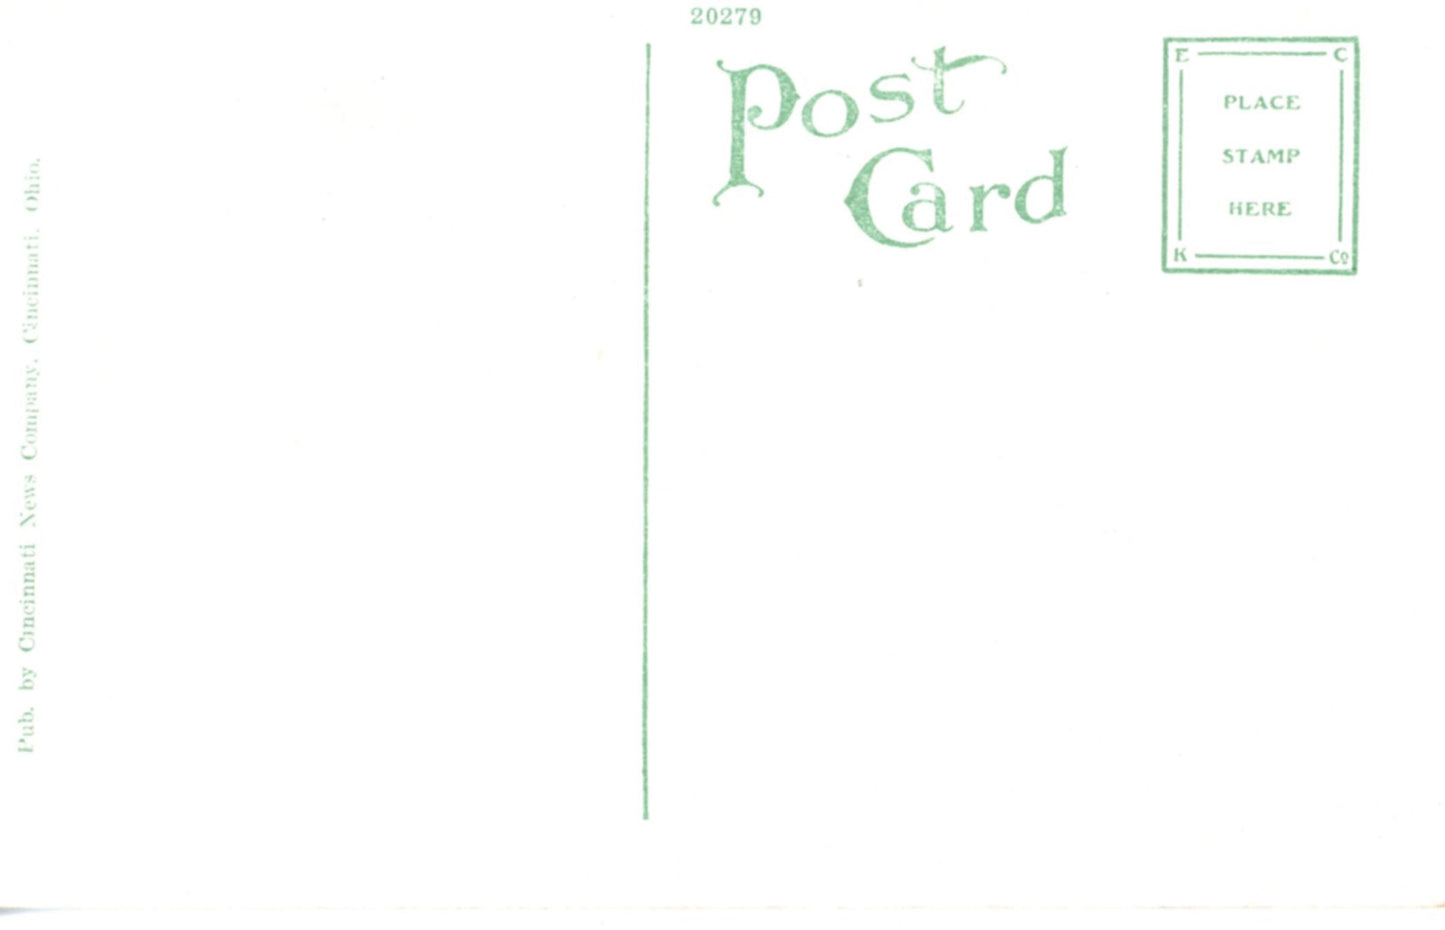 Young Men's Christian Association CINCINNATI OHIO Antique Linen Postcard Circa 1918